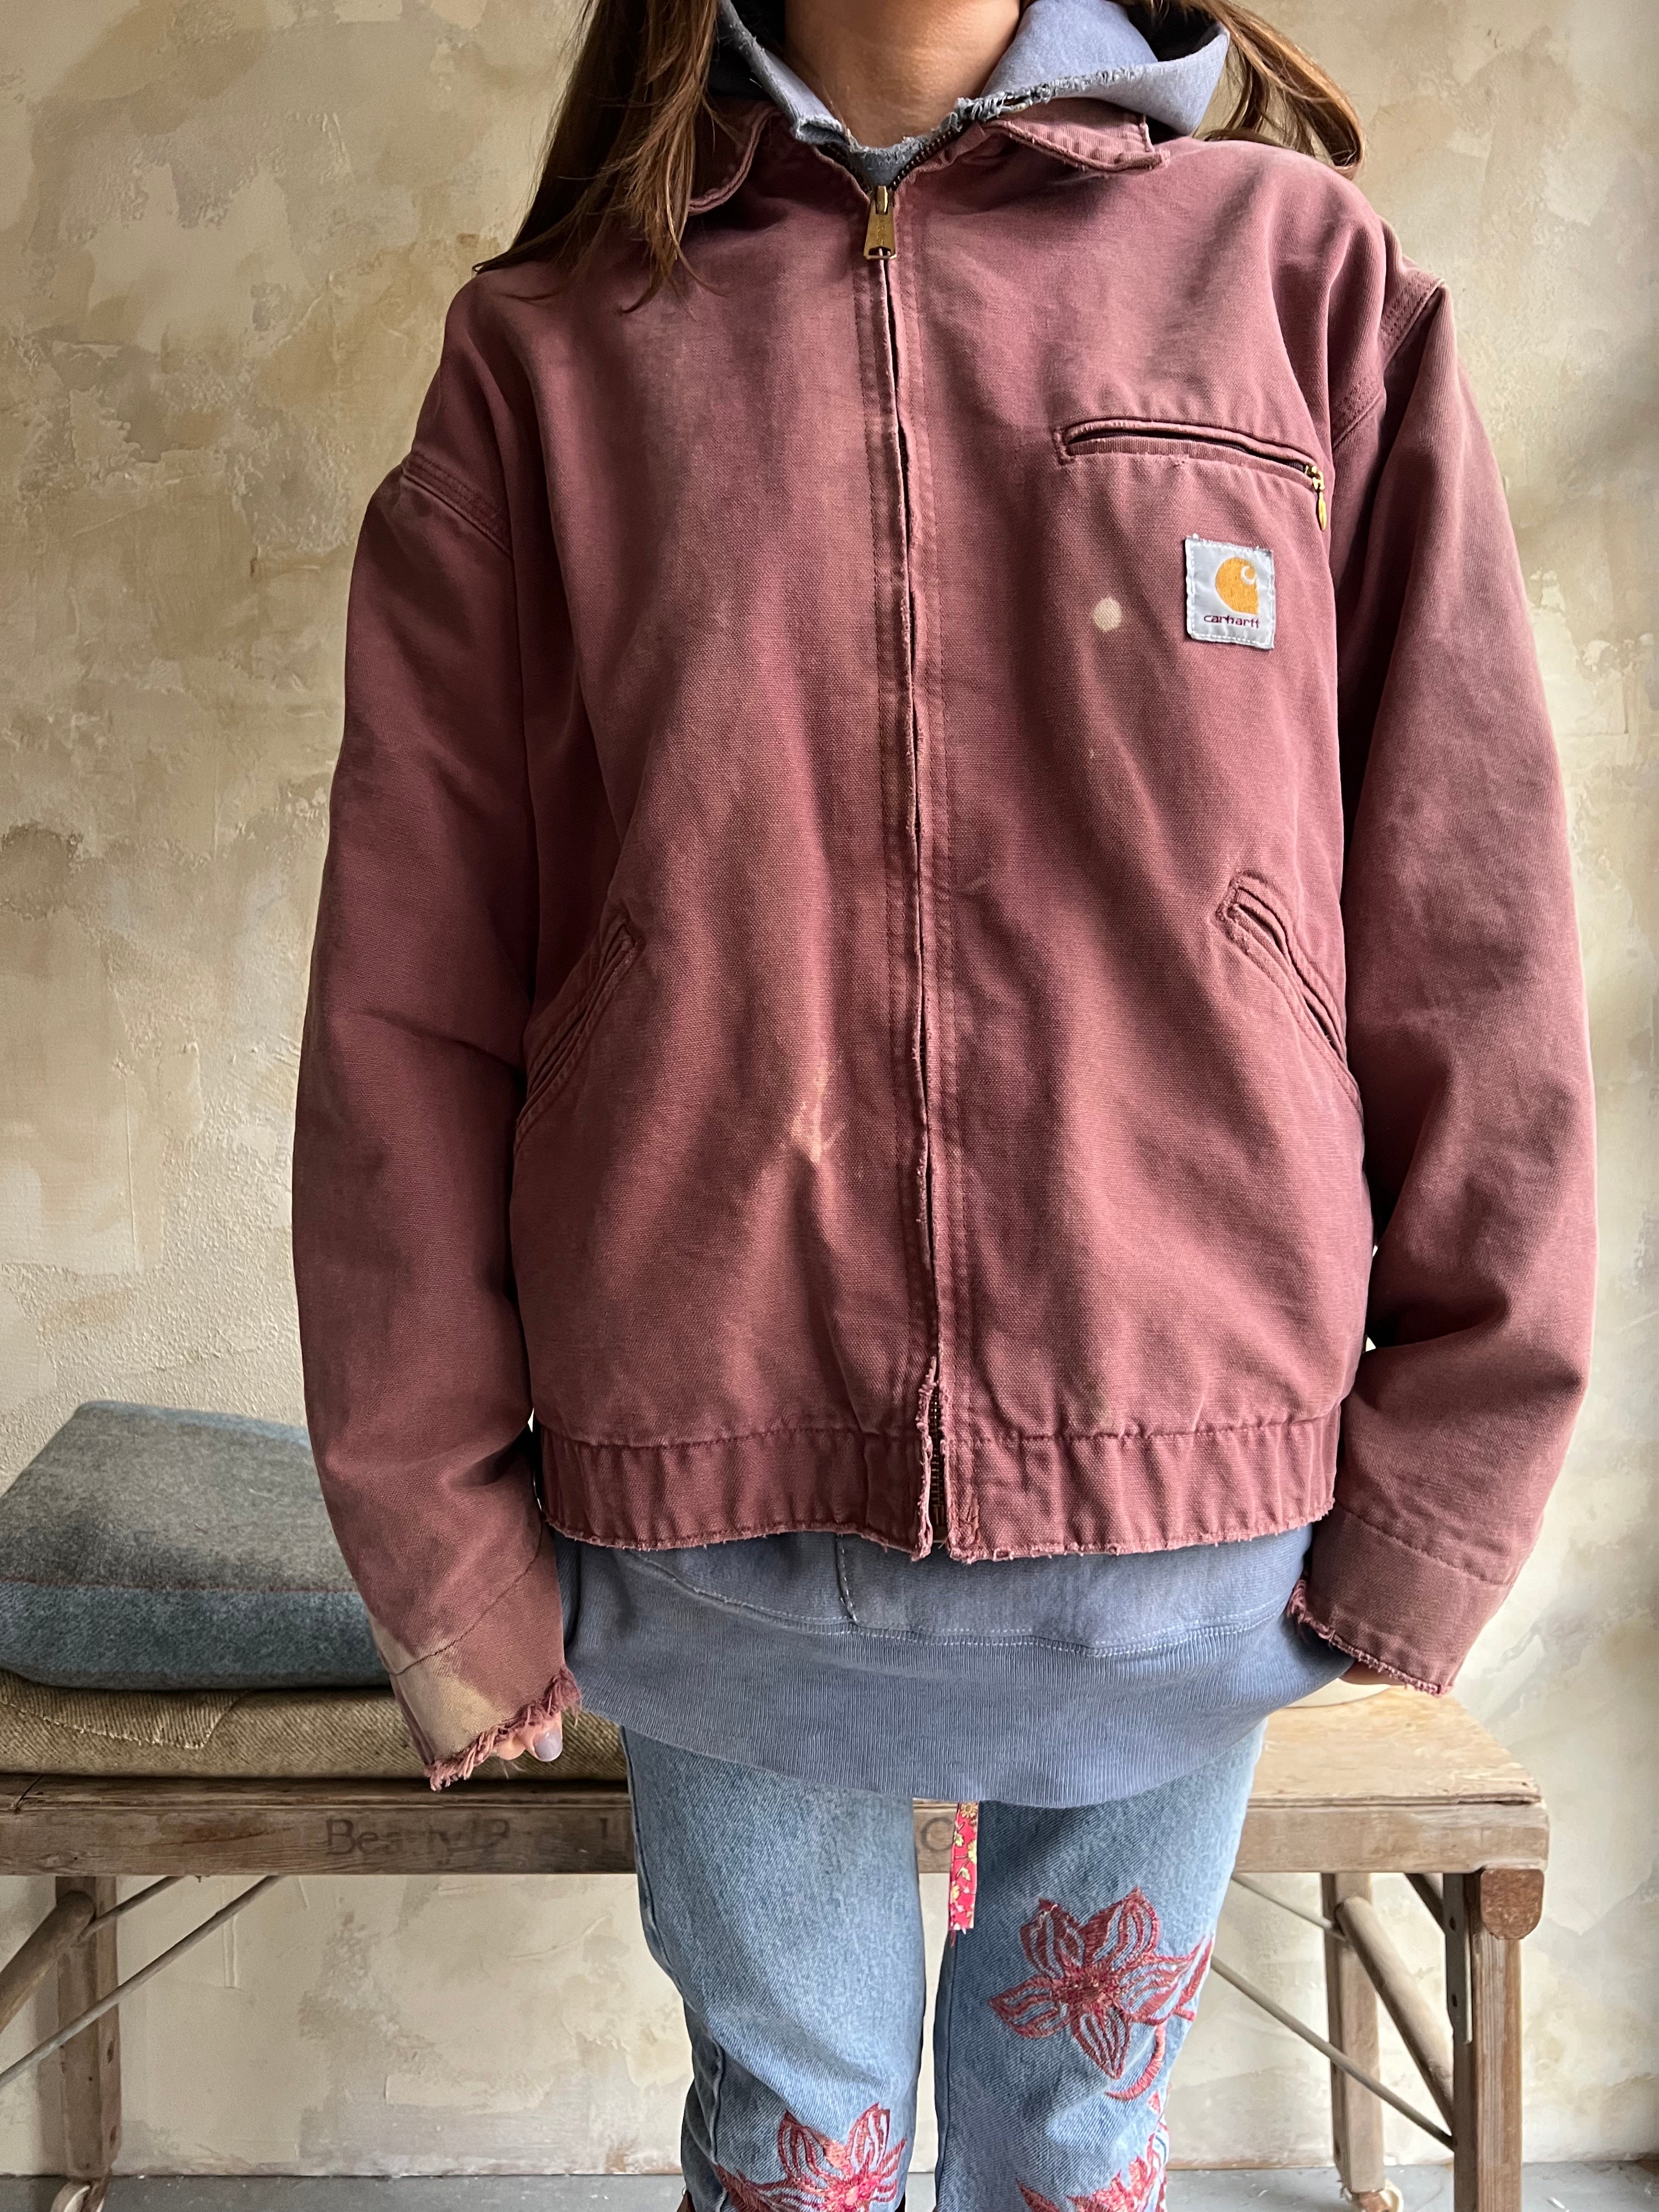 Distressed Dusty Rose Carhartt Jacket